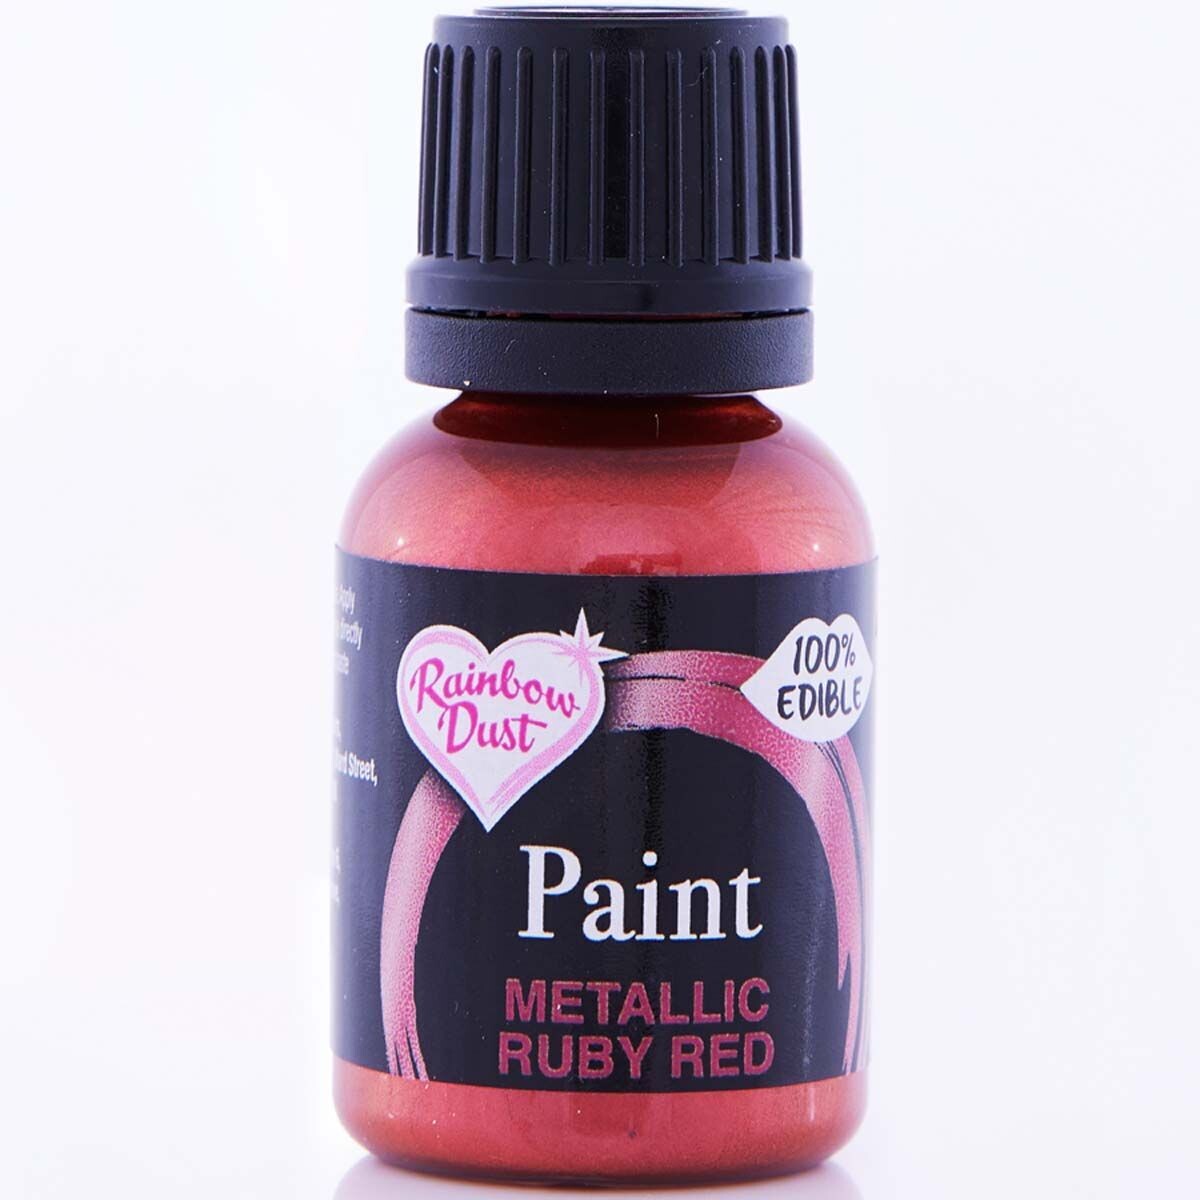 Rainbow Dust Metallic Paint -RUBY RED 24g - Μεταλλικό Βρώσιμο χρώμα ζωγραφικής Έντονο Κόκκινο